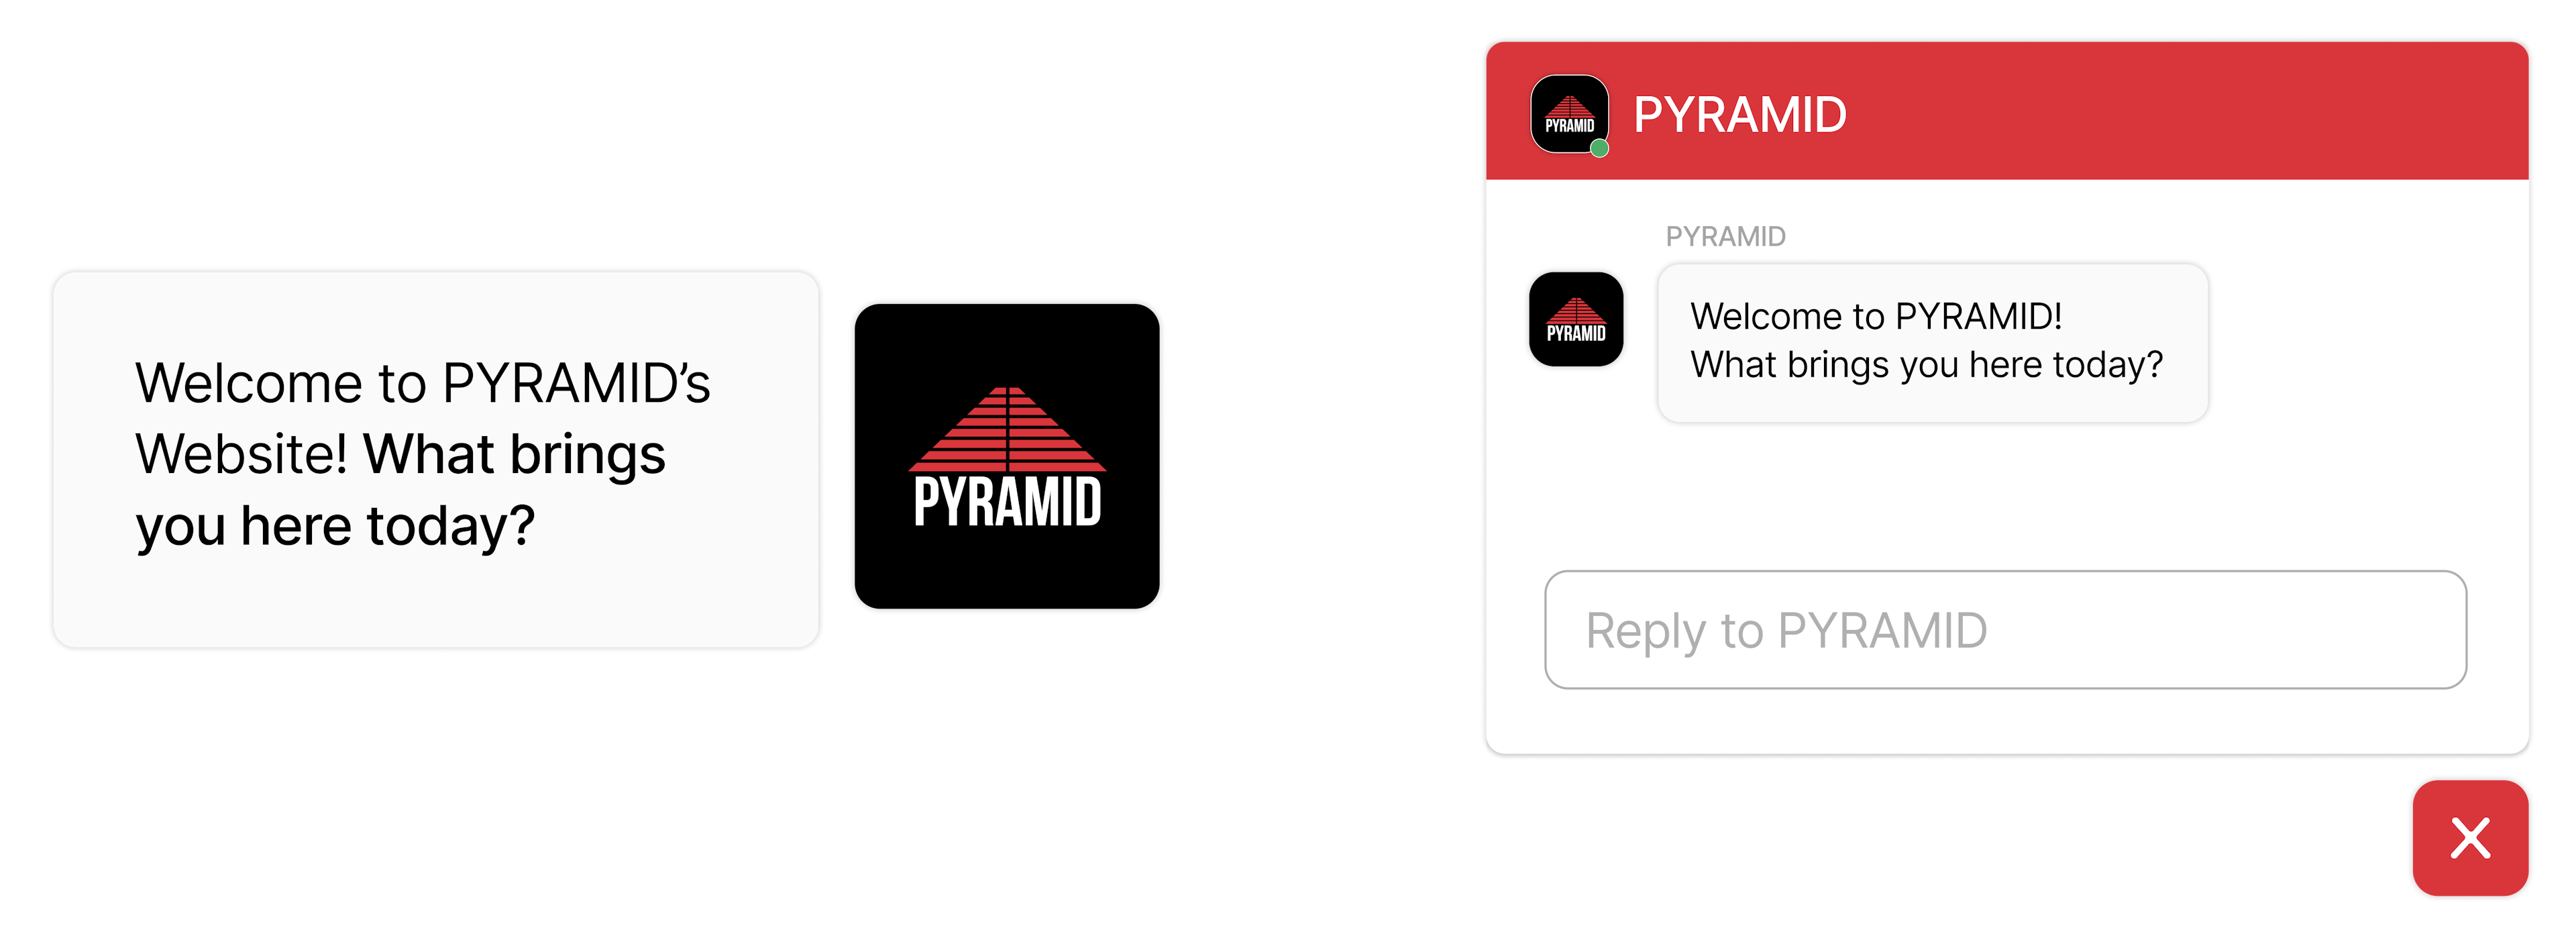 PYRAMID.fitness homepage